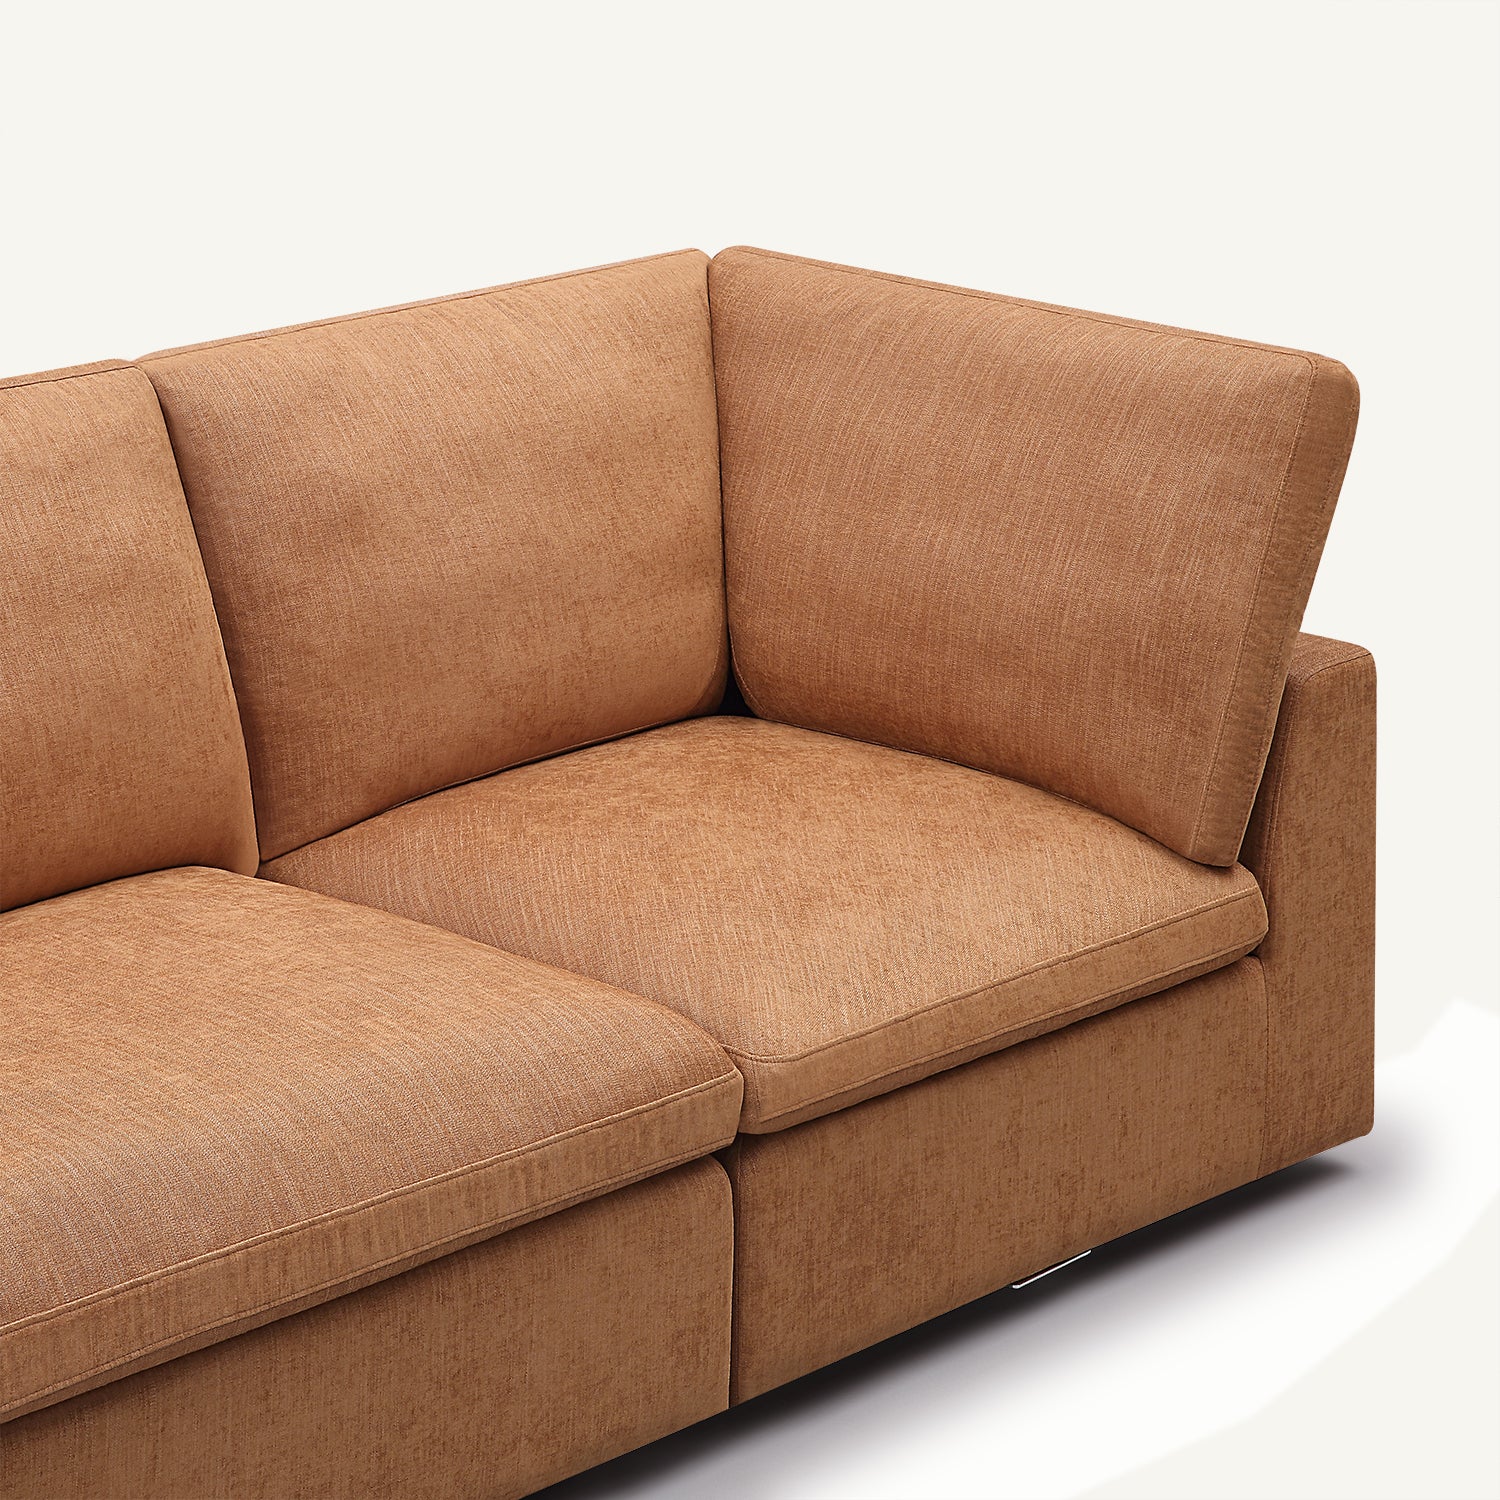 Cloud Tan Linen 6-seat Sofa with Ottoman